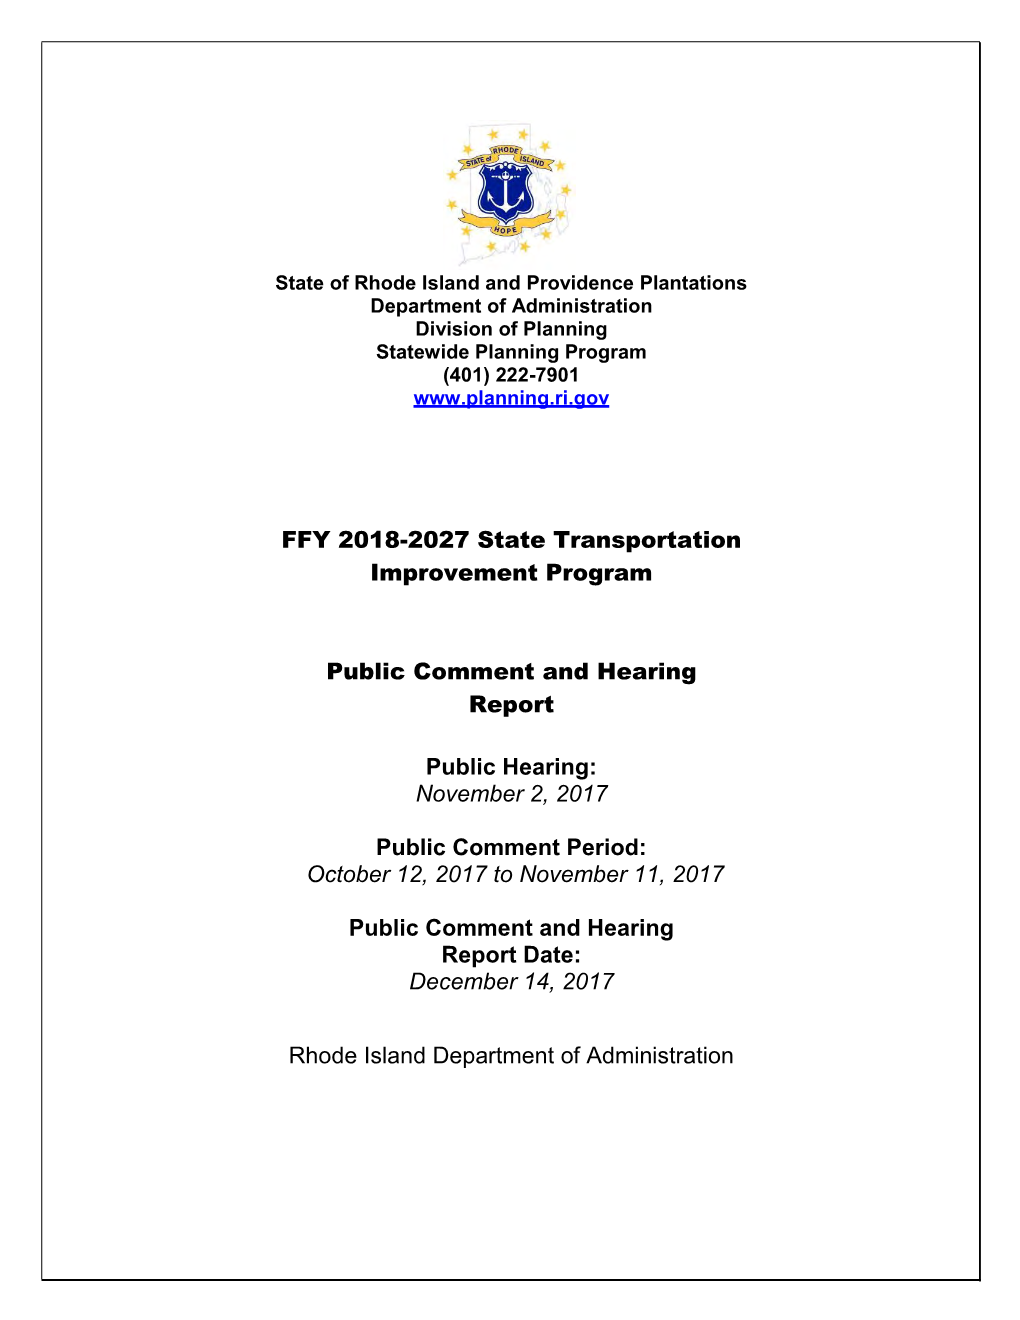 FFY 2018-2027 State Transportation Improvement Program Public